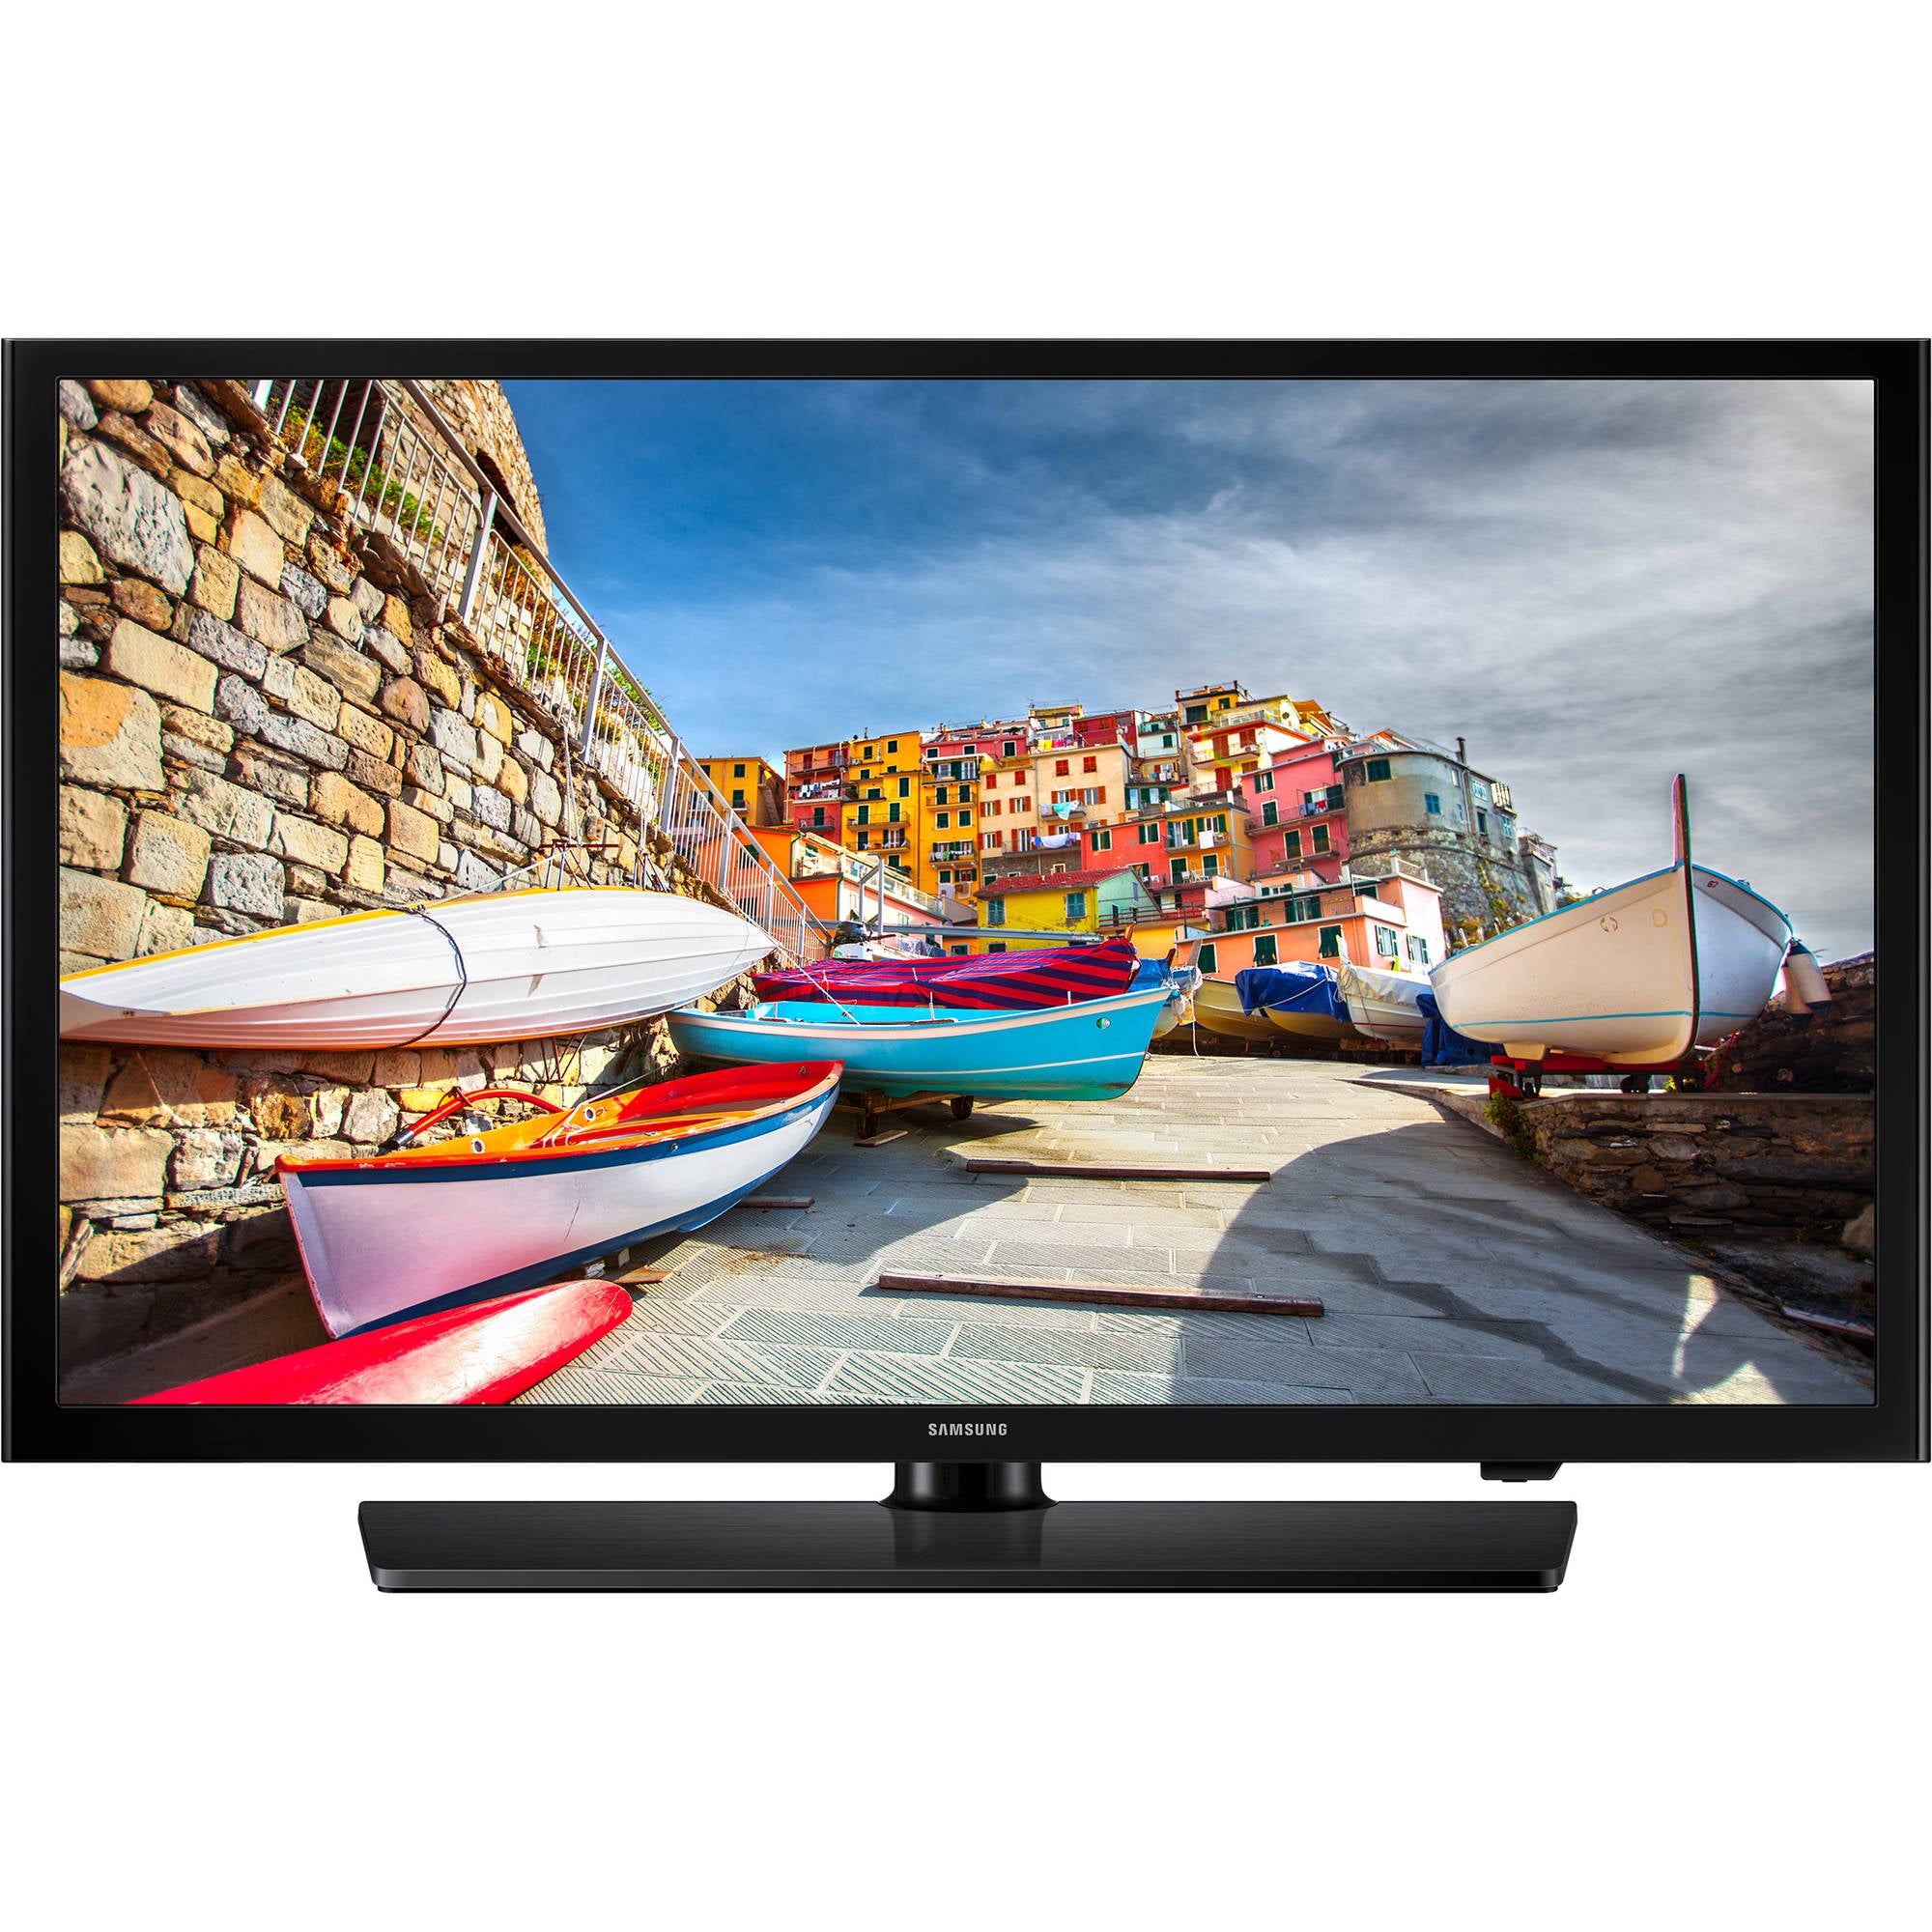 Samsung HG50NE470SFXZA 470 Series 50" Full HD Hospitality TV (Black)